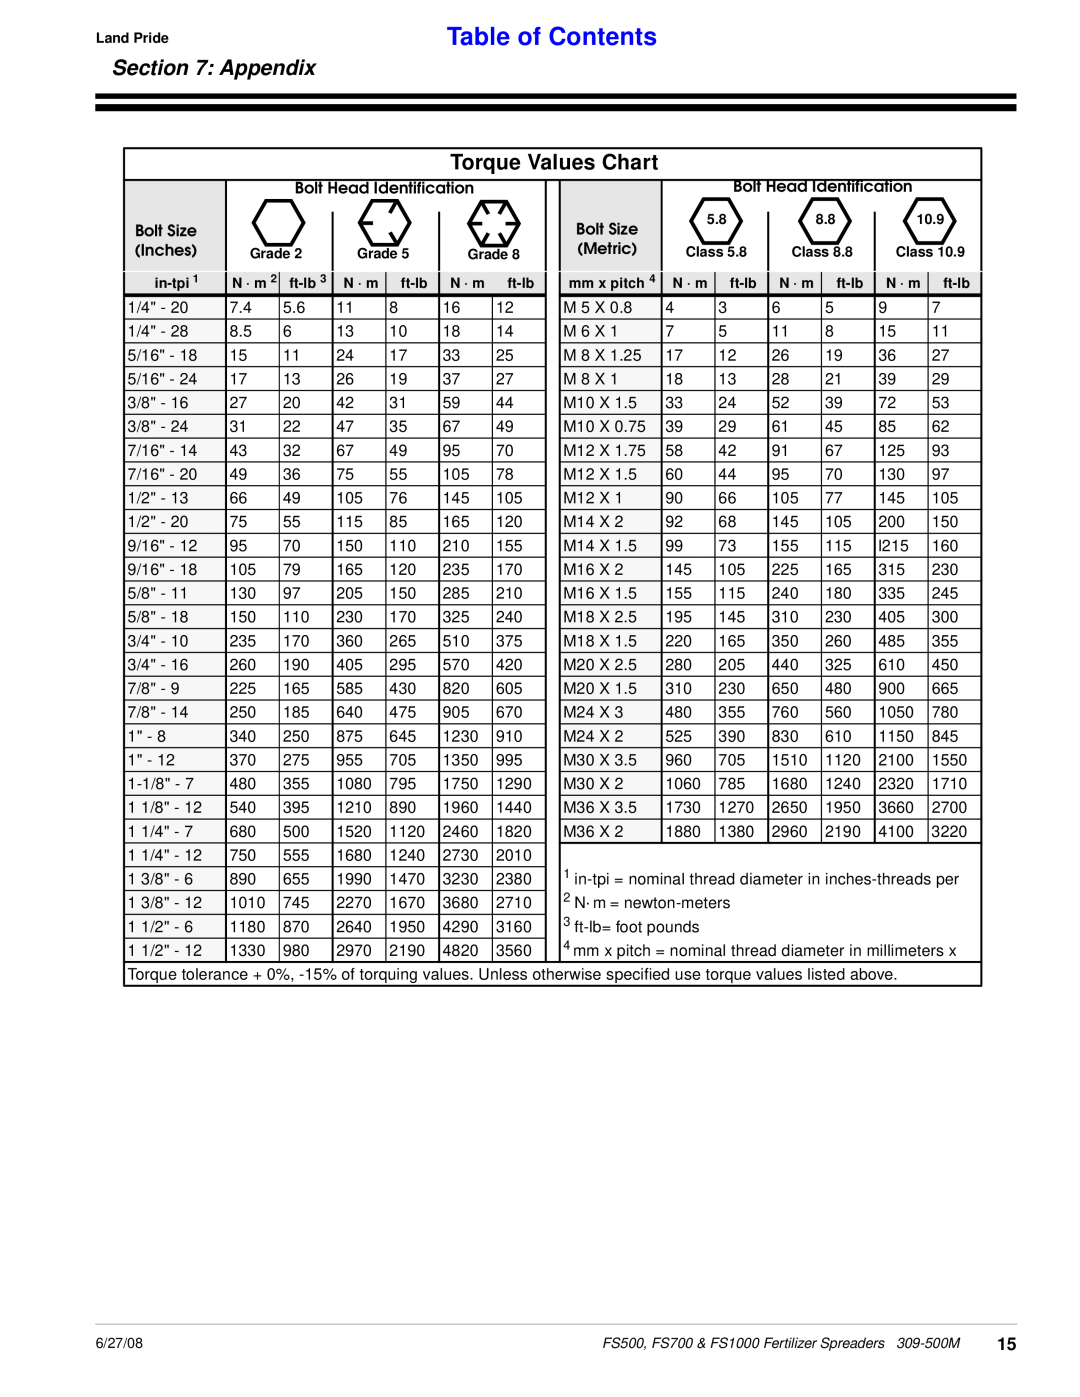 Land Pride FS1000, FS500, FS700, Fertilizer Spreaders manual Appendix, Torque Values Chart, Table of Contents 